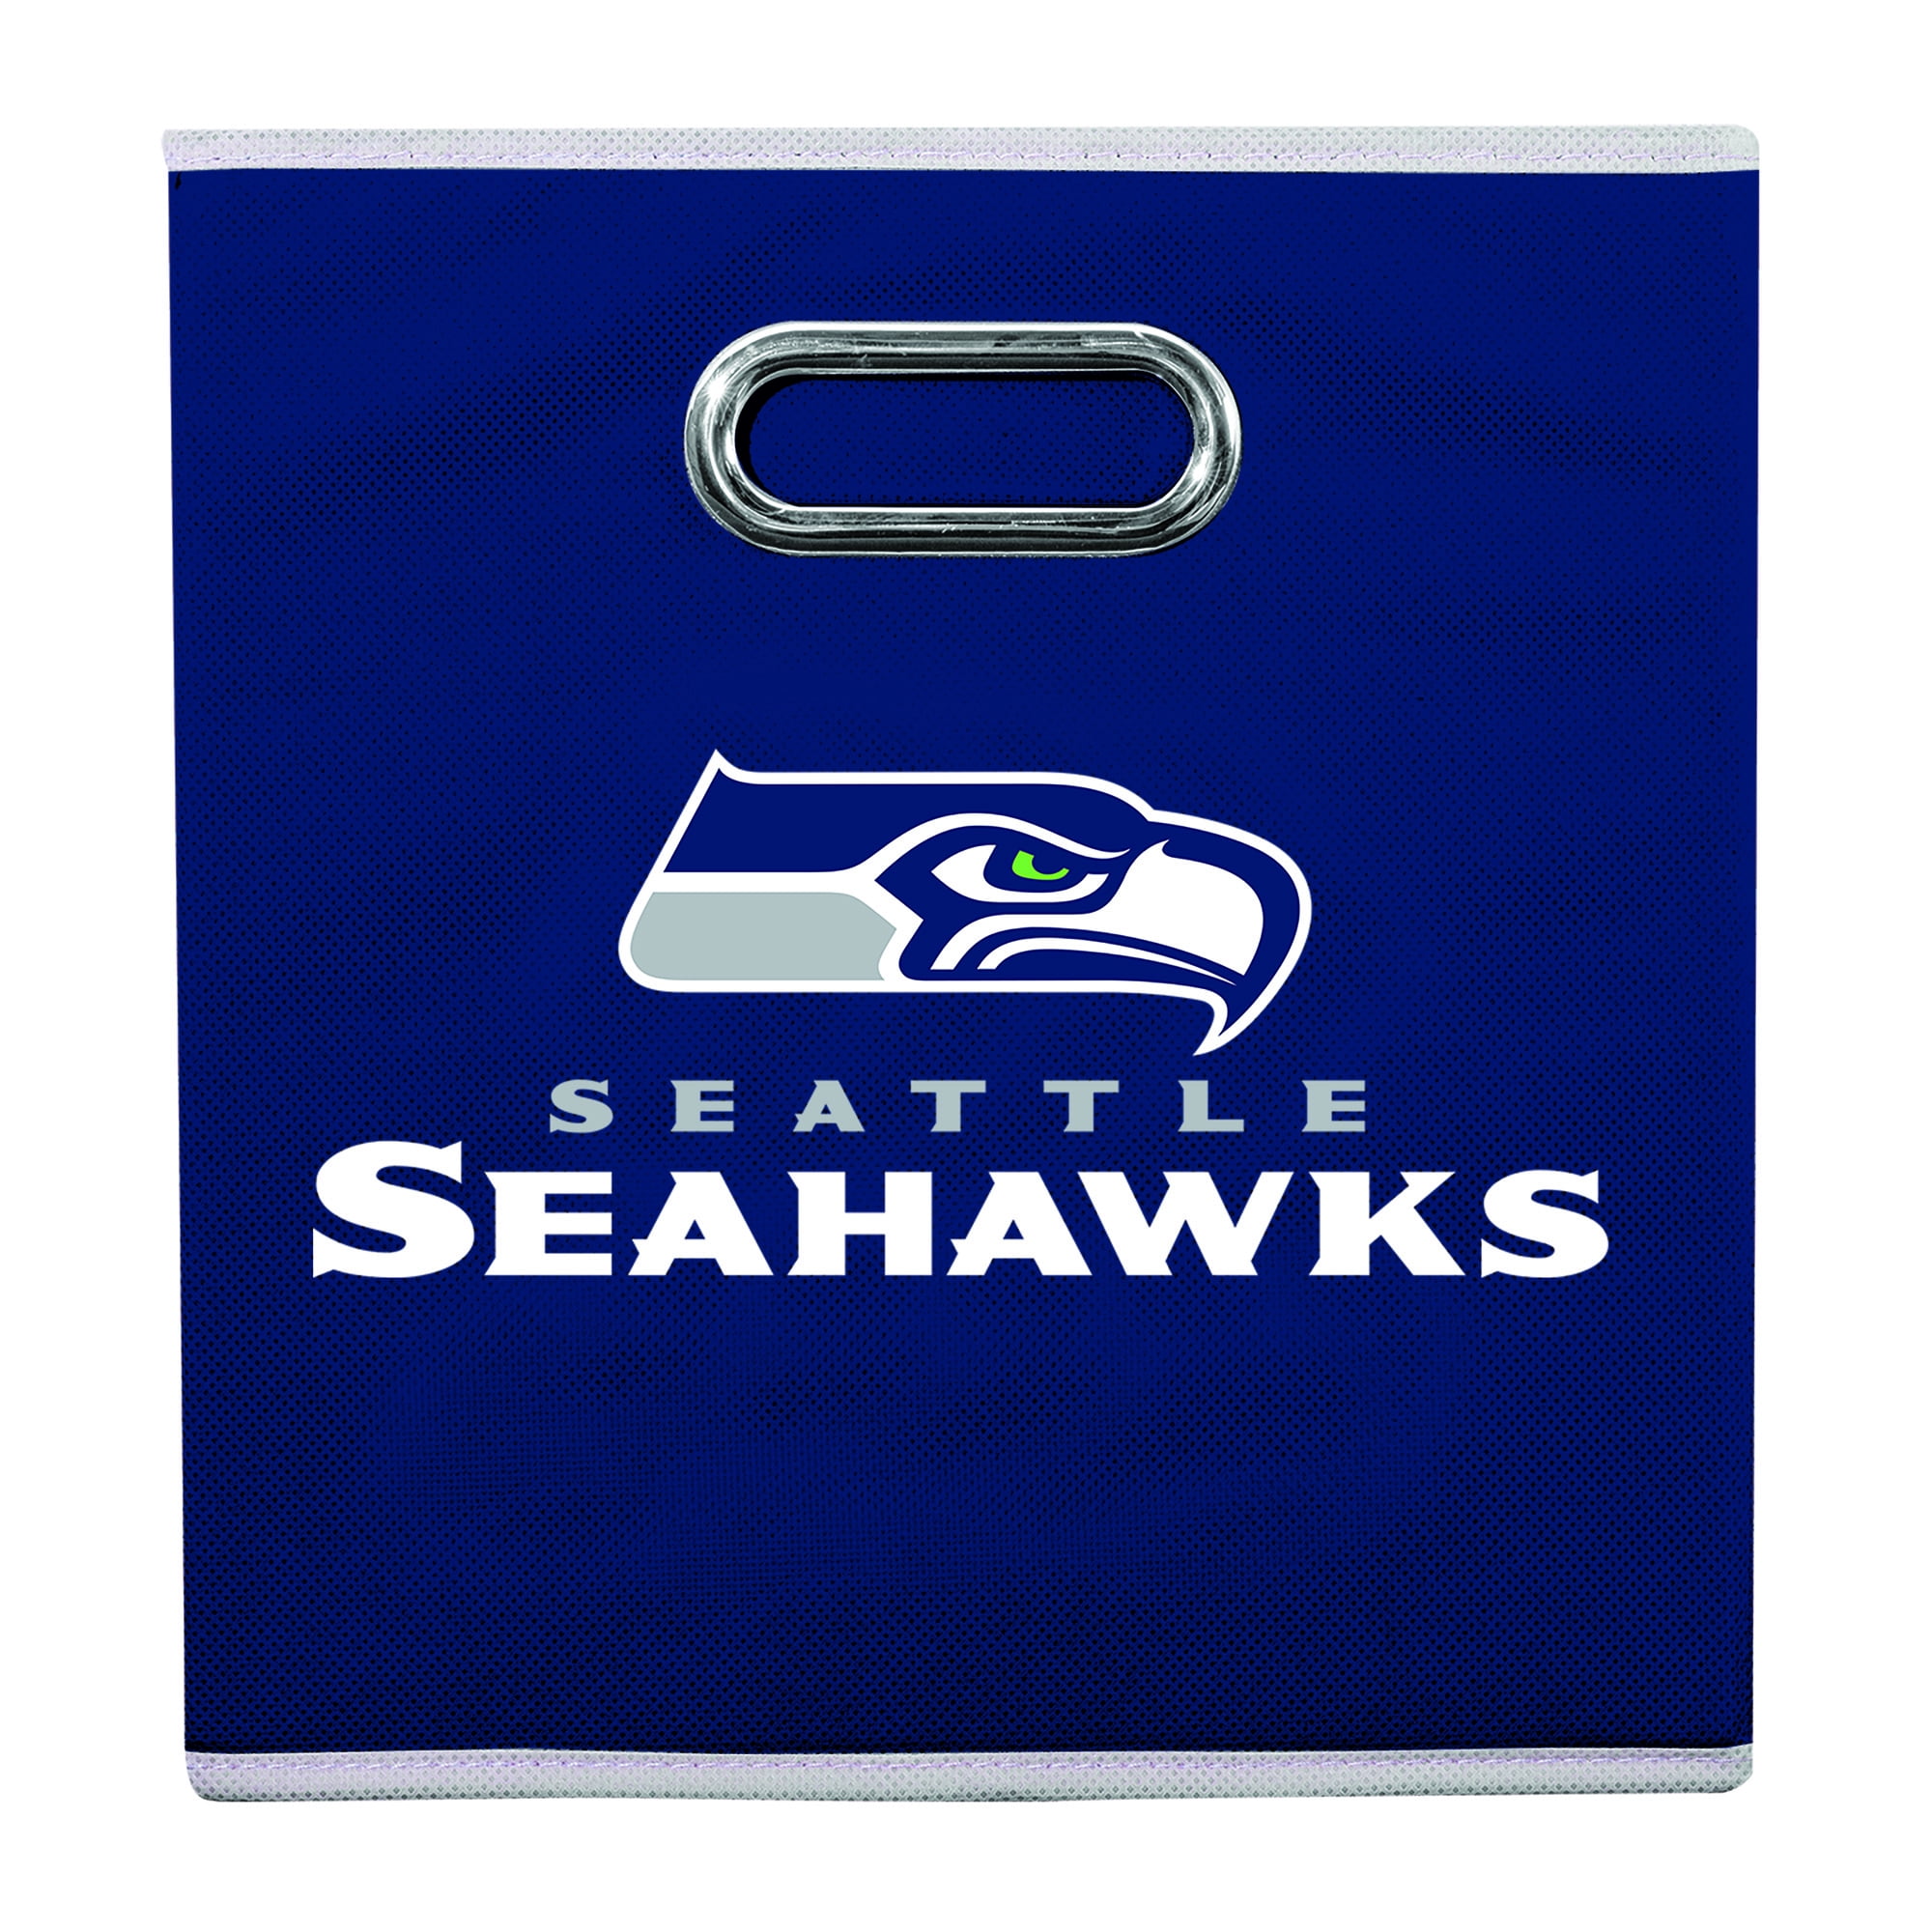 Seattle Seahawks Collapsible Storage Bin